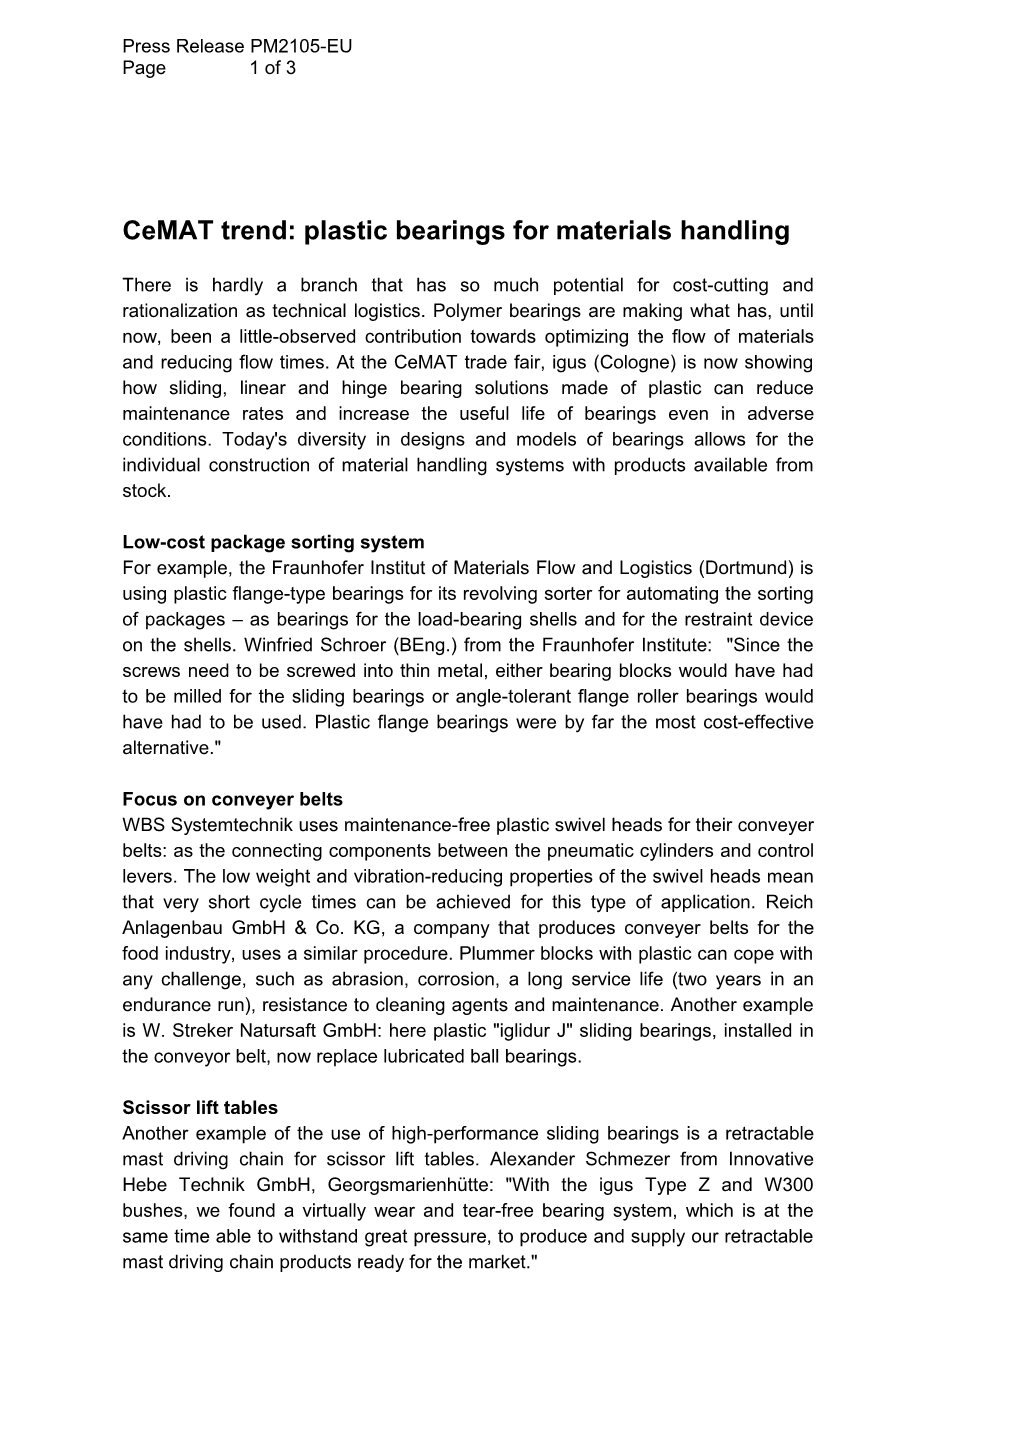 Cemat Trend: Plastic Bearings for Materials Handling